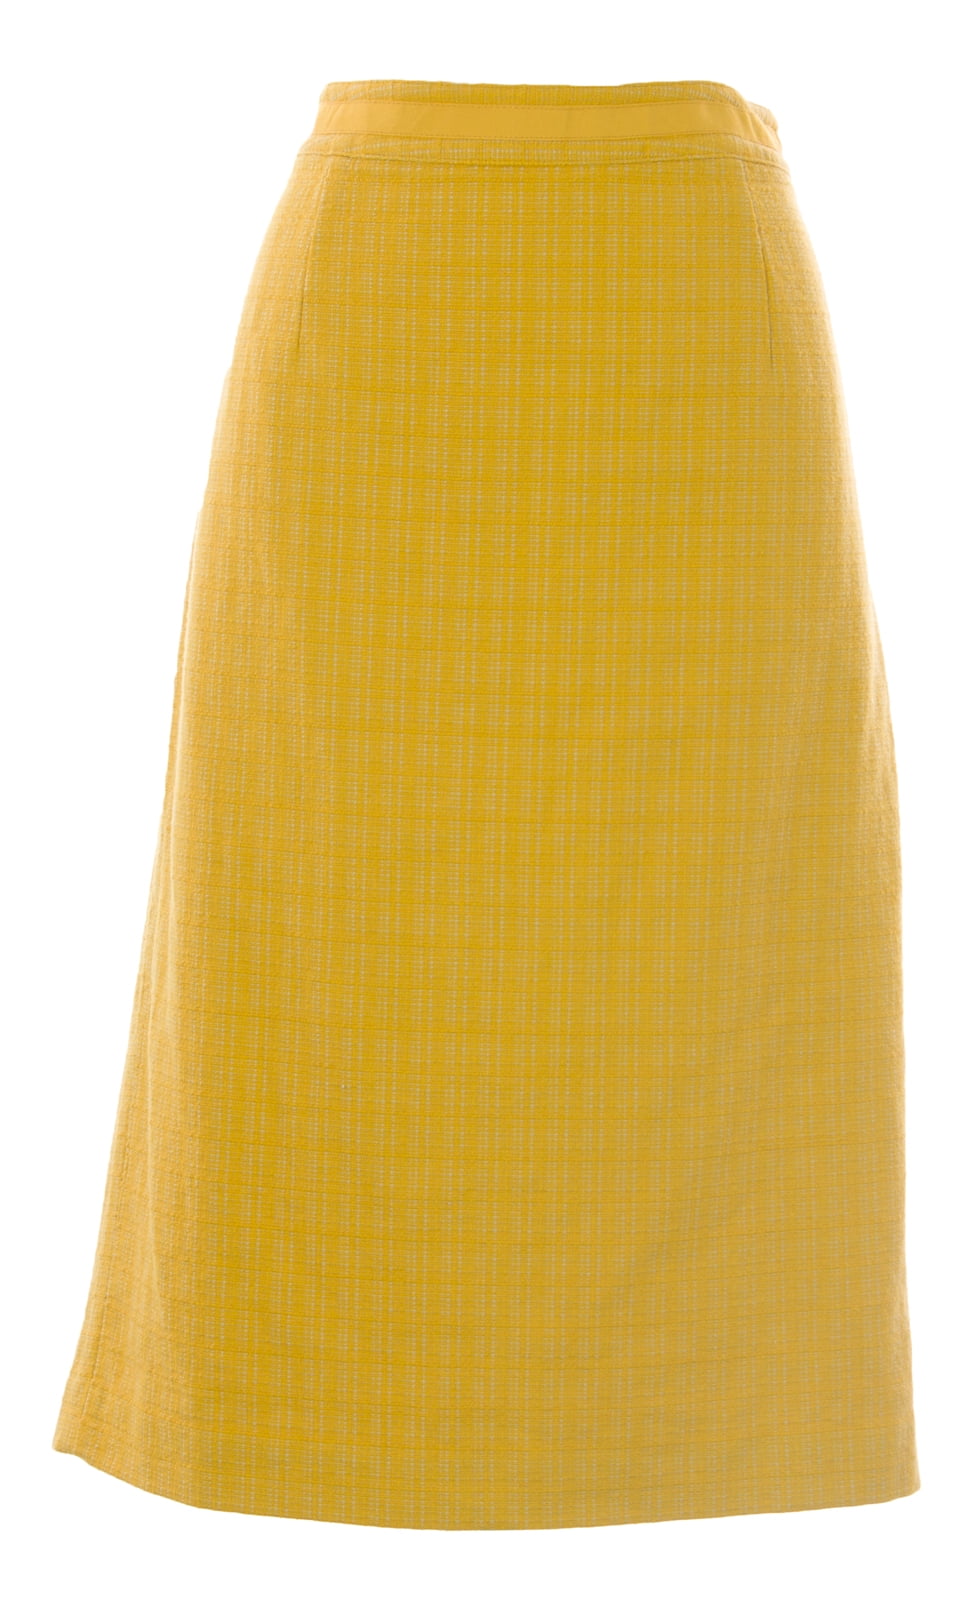 BODEN Women's Cotton Draycott Skirt US Sz 10L Yellow - Walmart.com